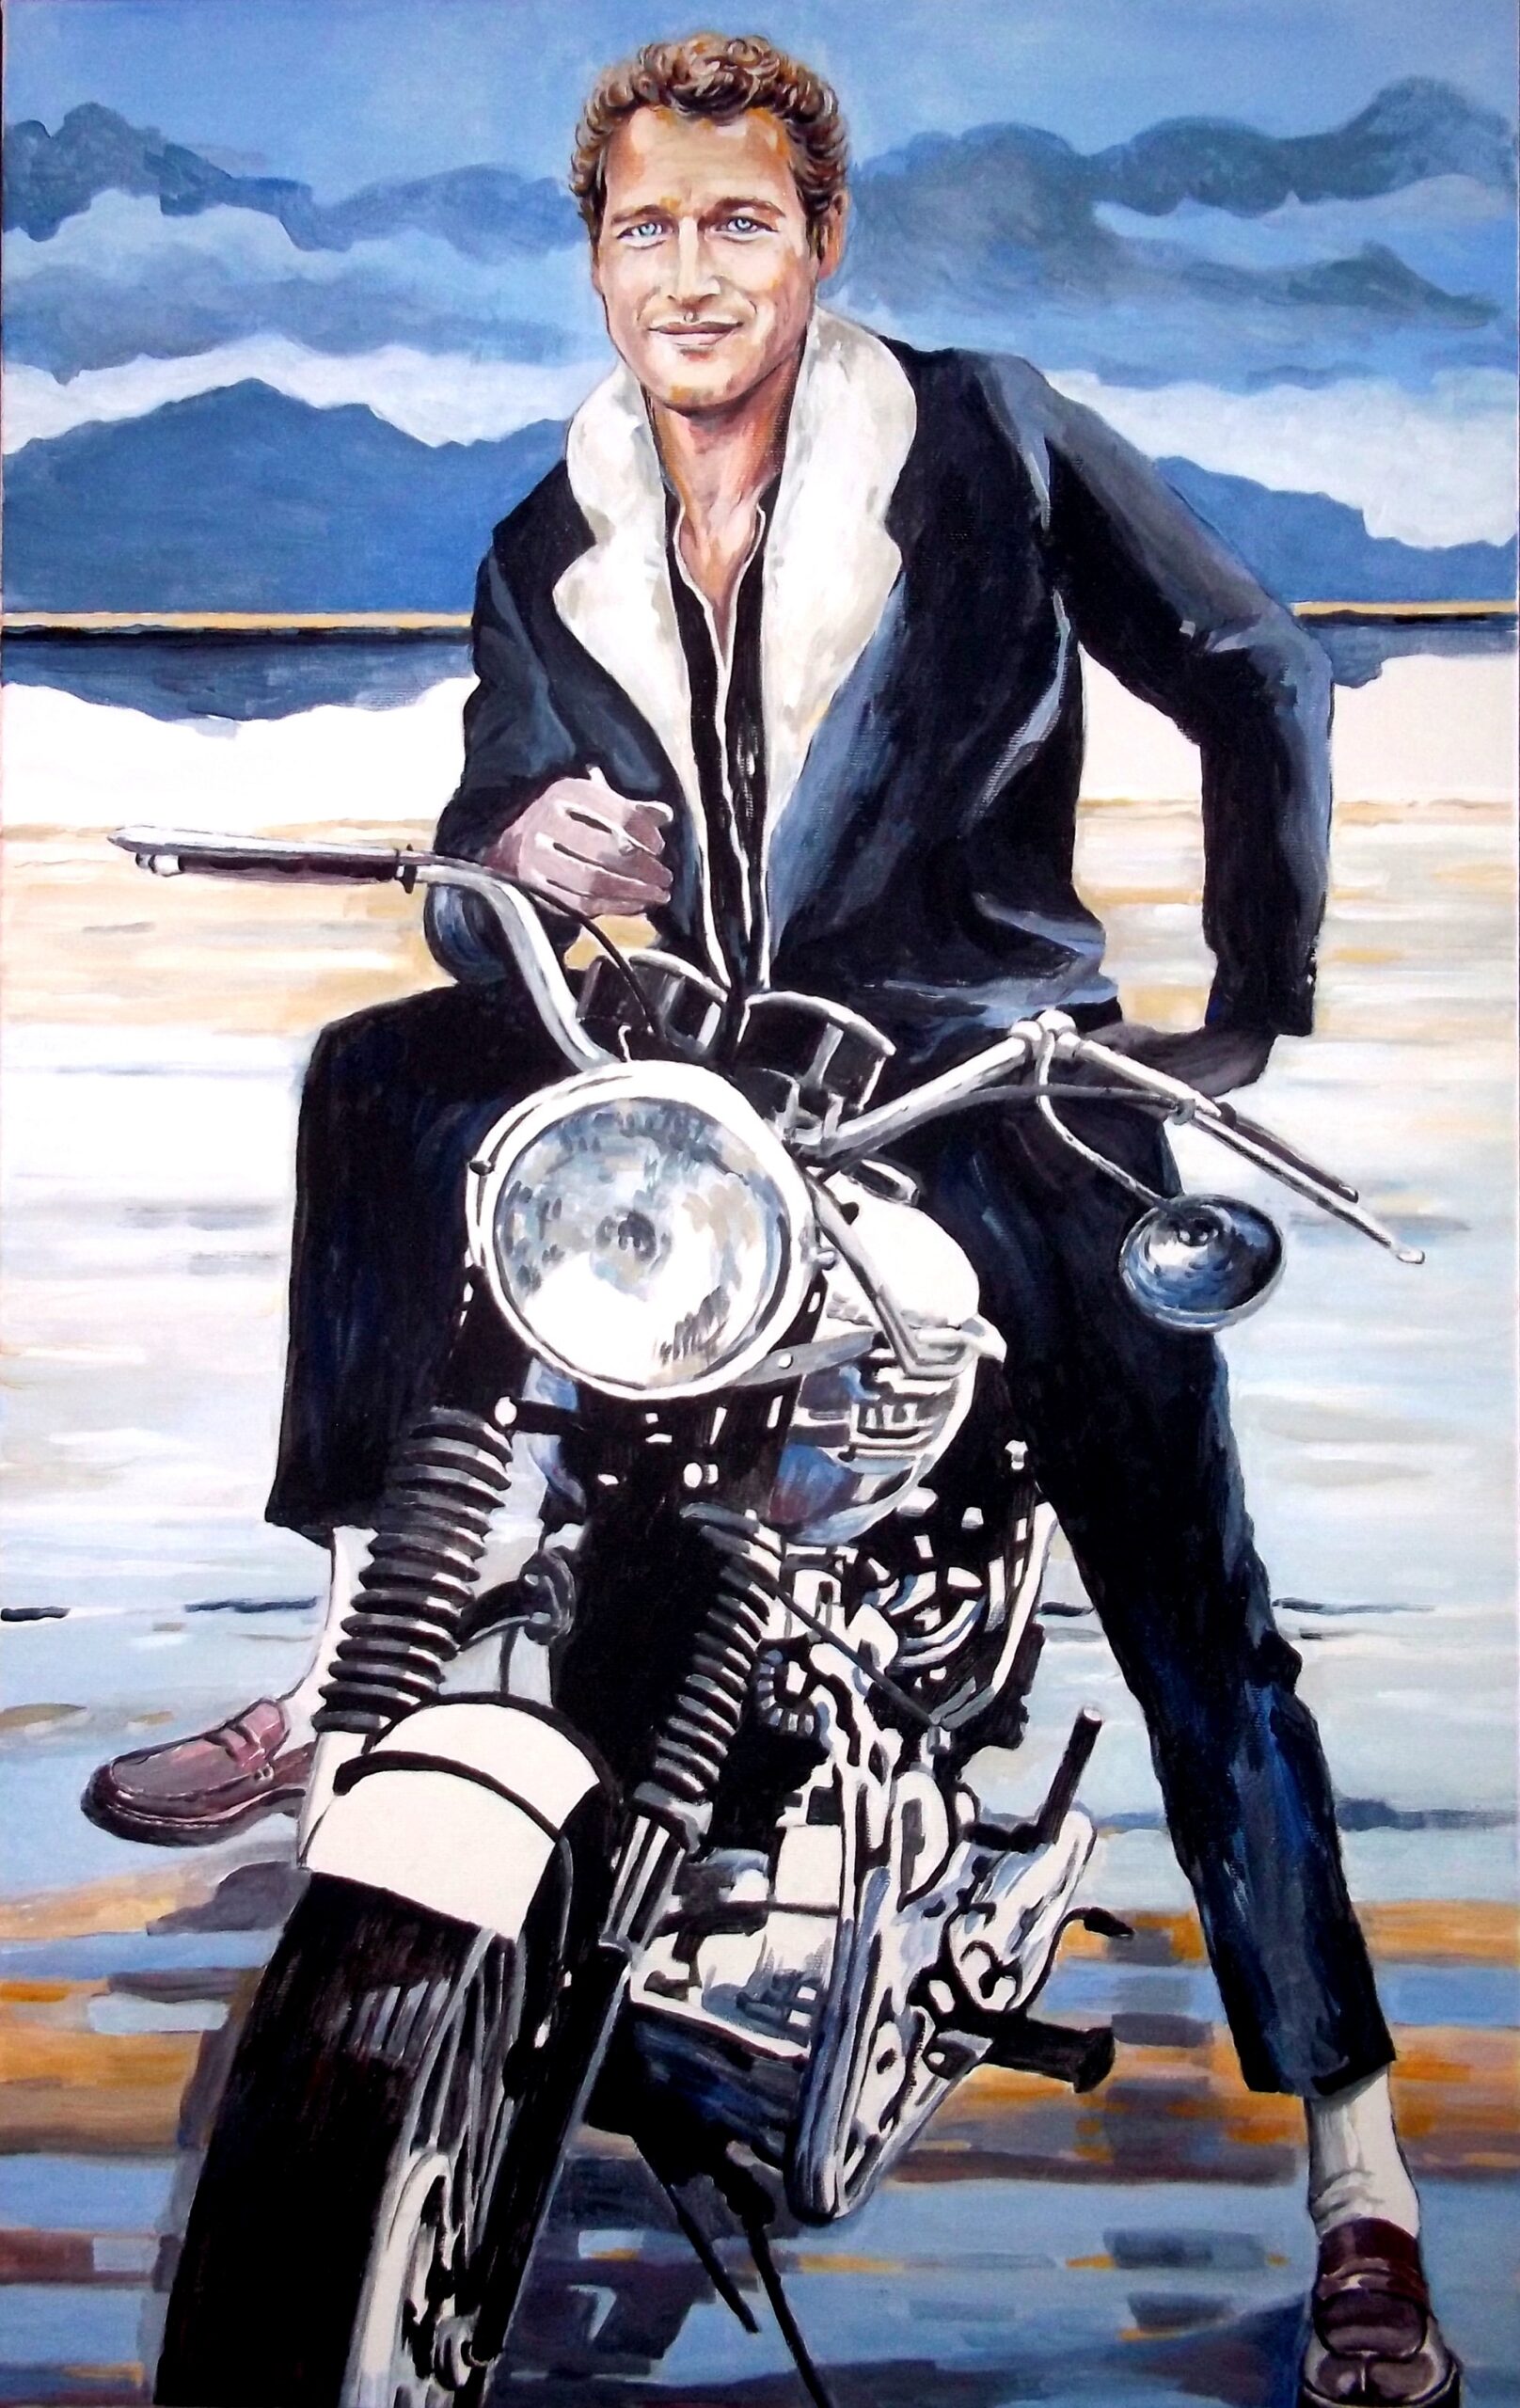 Paul - The blue rider